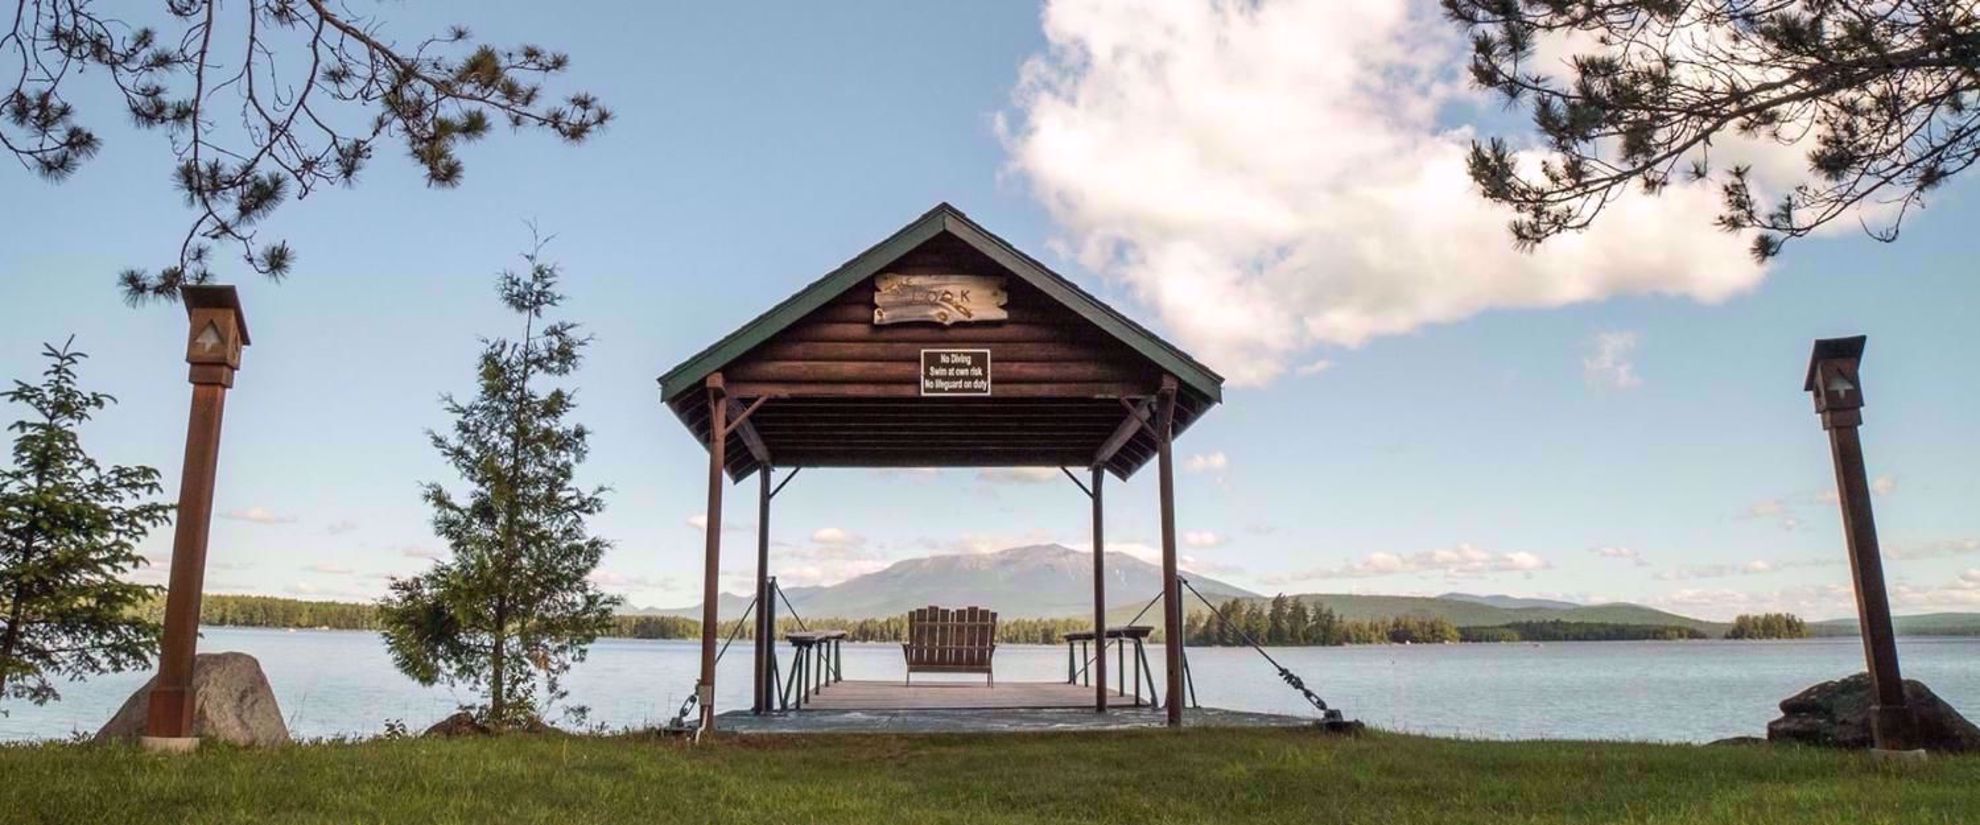 enjoy a retreat stay on Millinocket Lake